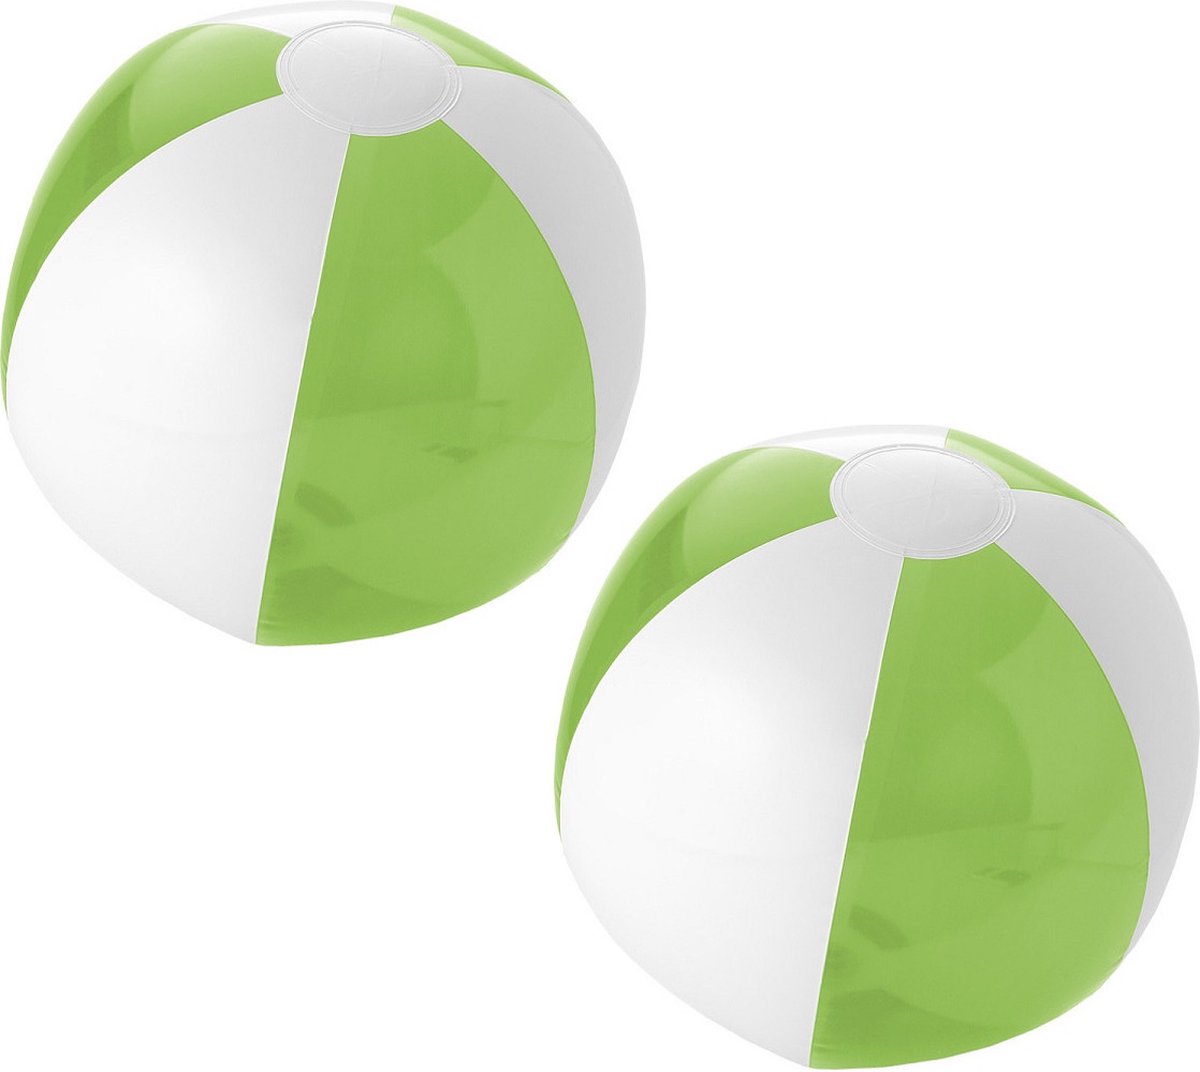 10x stuks opblaasbare strandballen groen/wit 30 cm - Buitenspeelgoed waterspeelgoed opblaasbaar